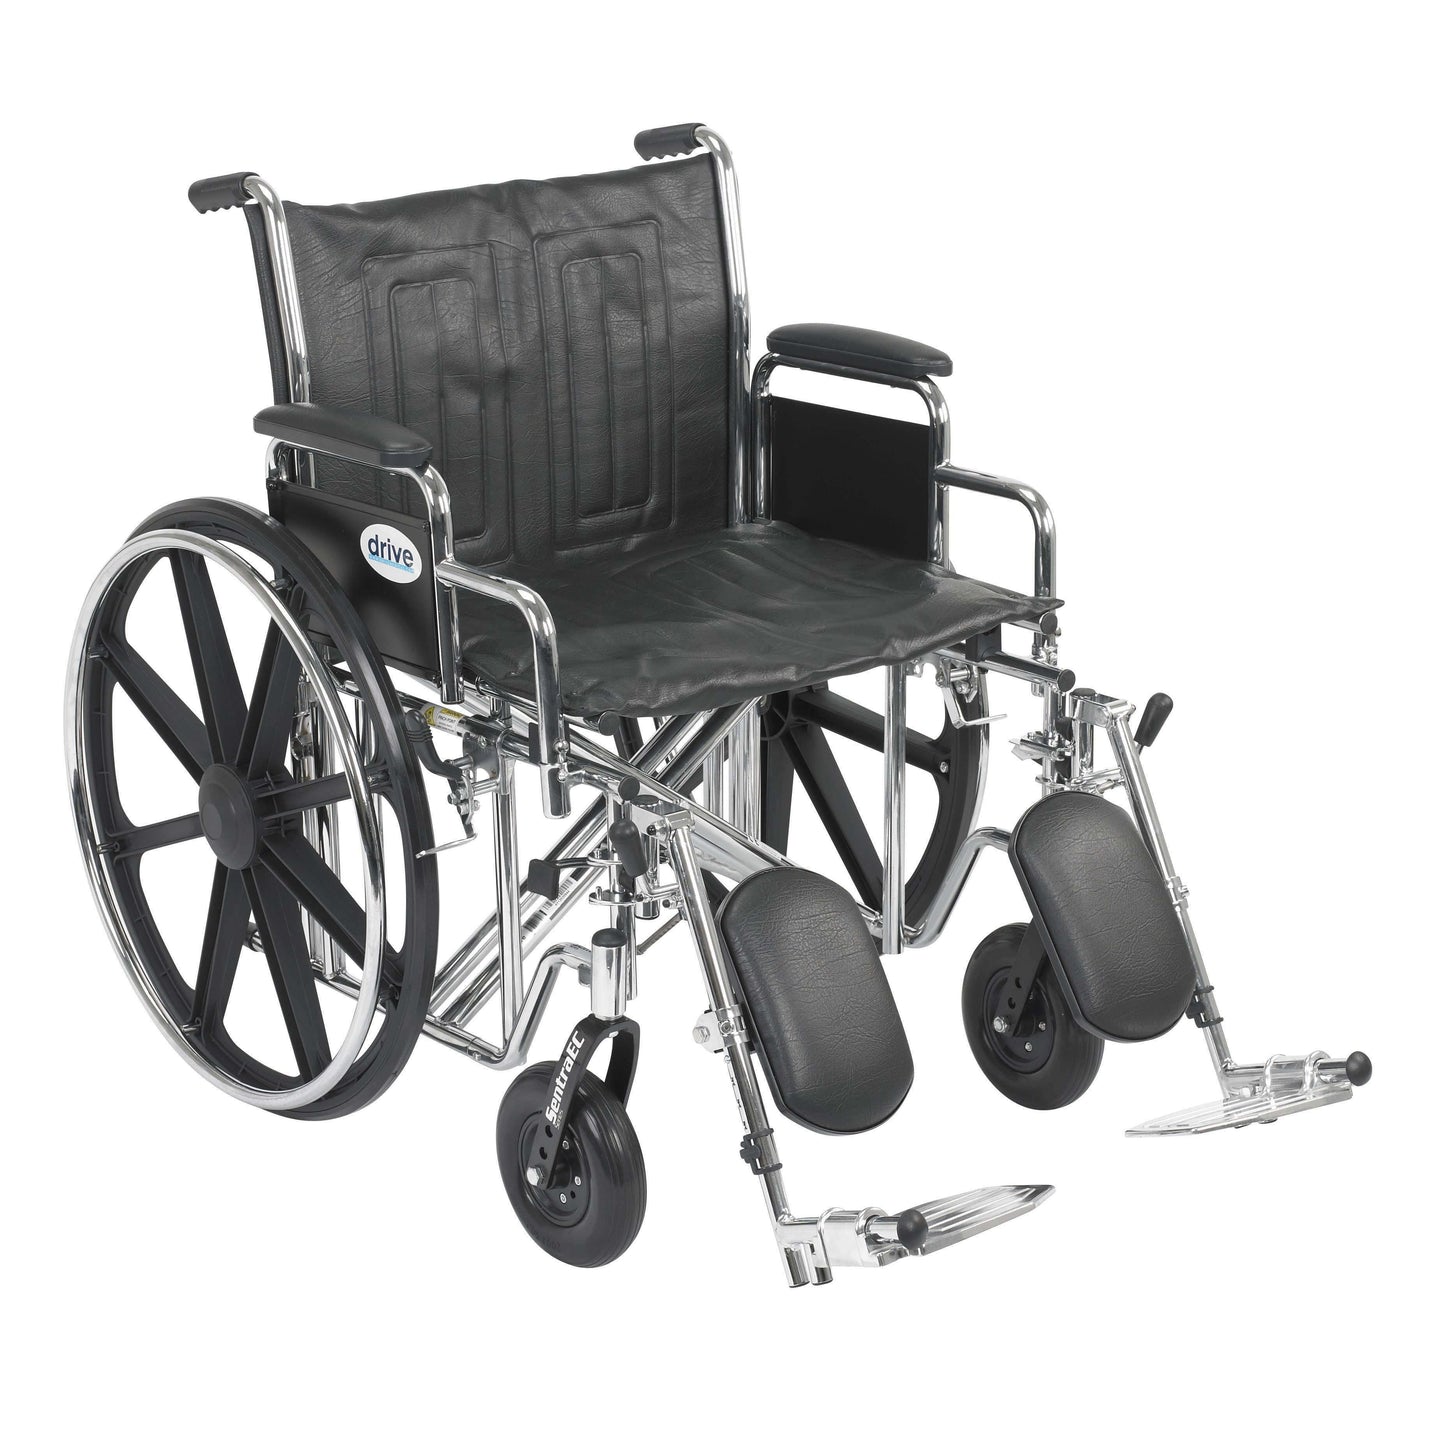 Drive std22ecdda-elr Sentra EC Heavy Duty Wheelchair, Detachable Desk Arms, Elevating Leg Rests, 22" Seat